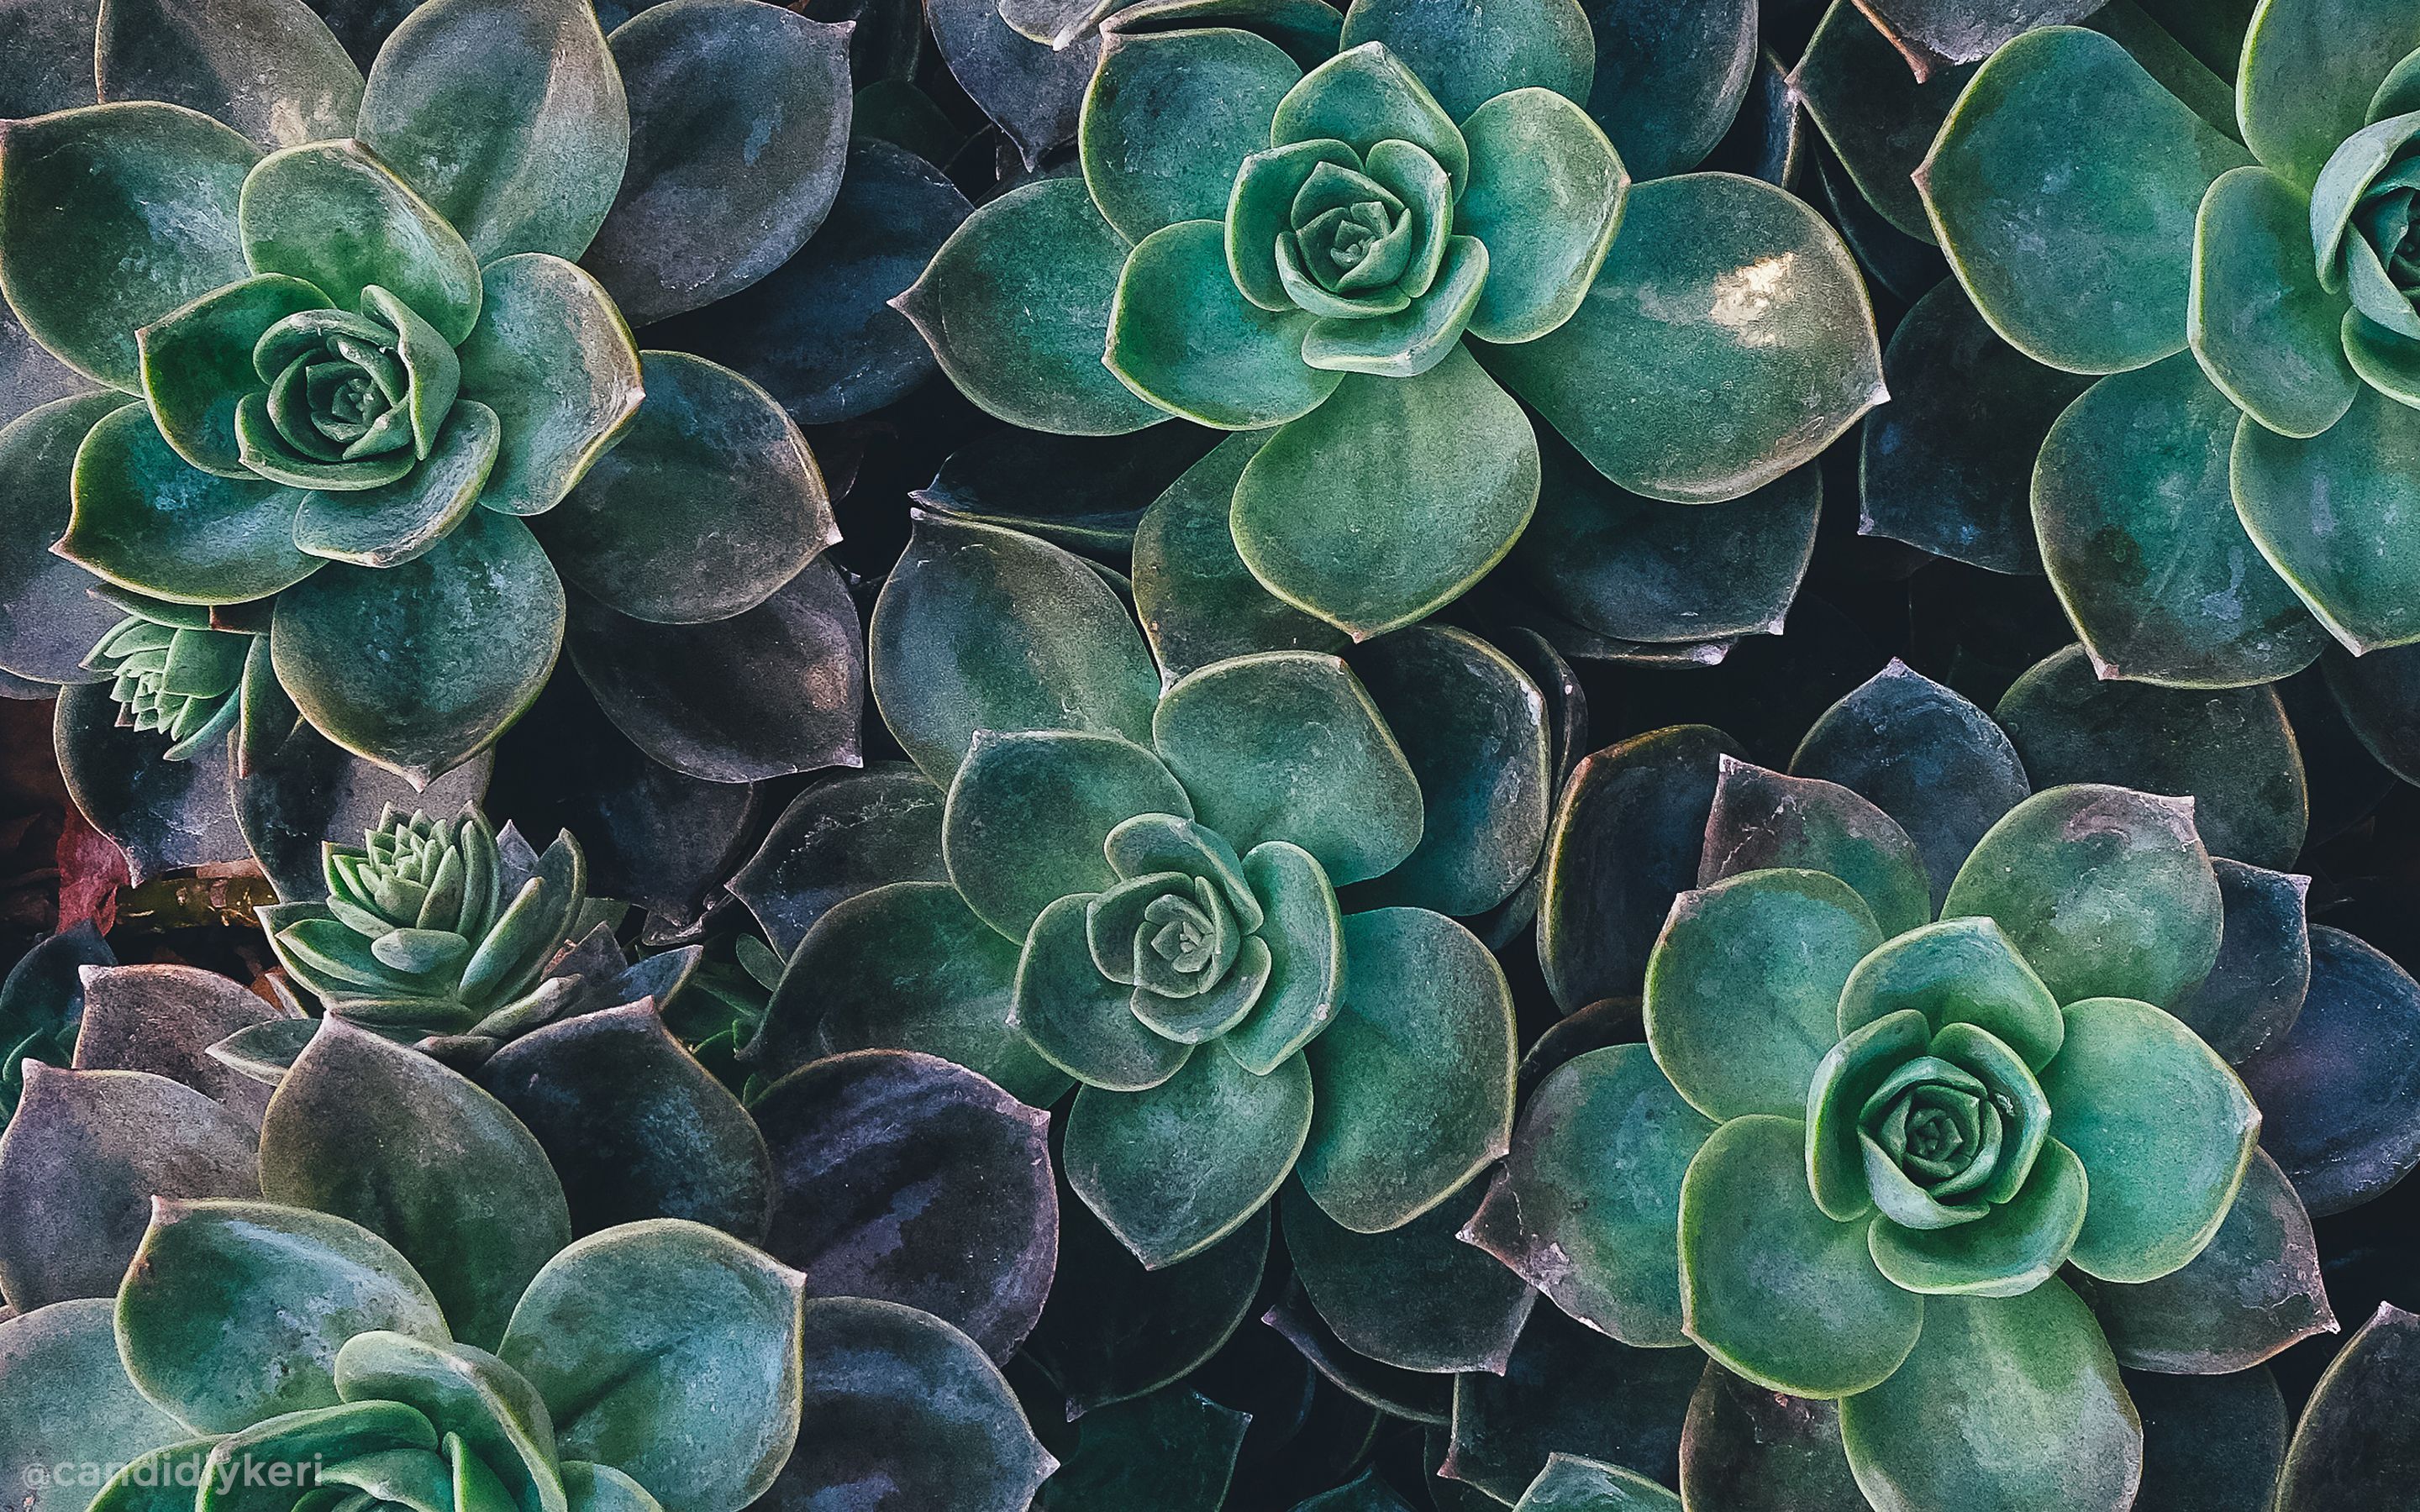 A close up of a succulent plant with green leaves. - Green, iMac, aqua